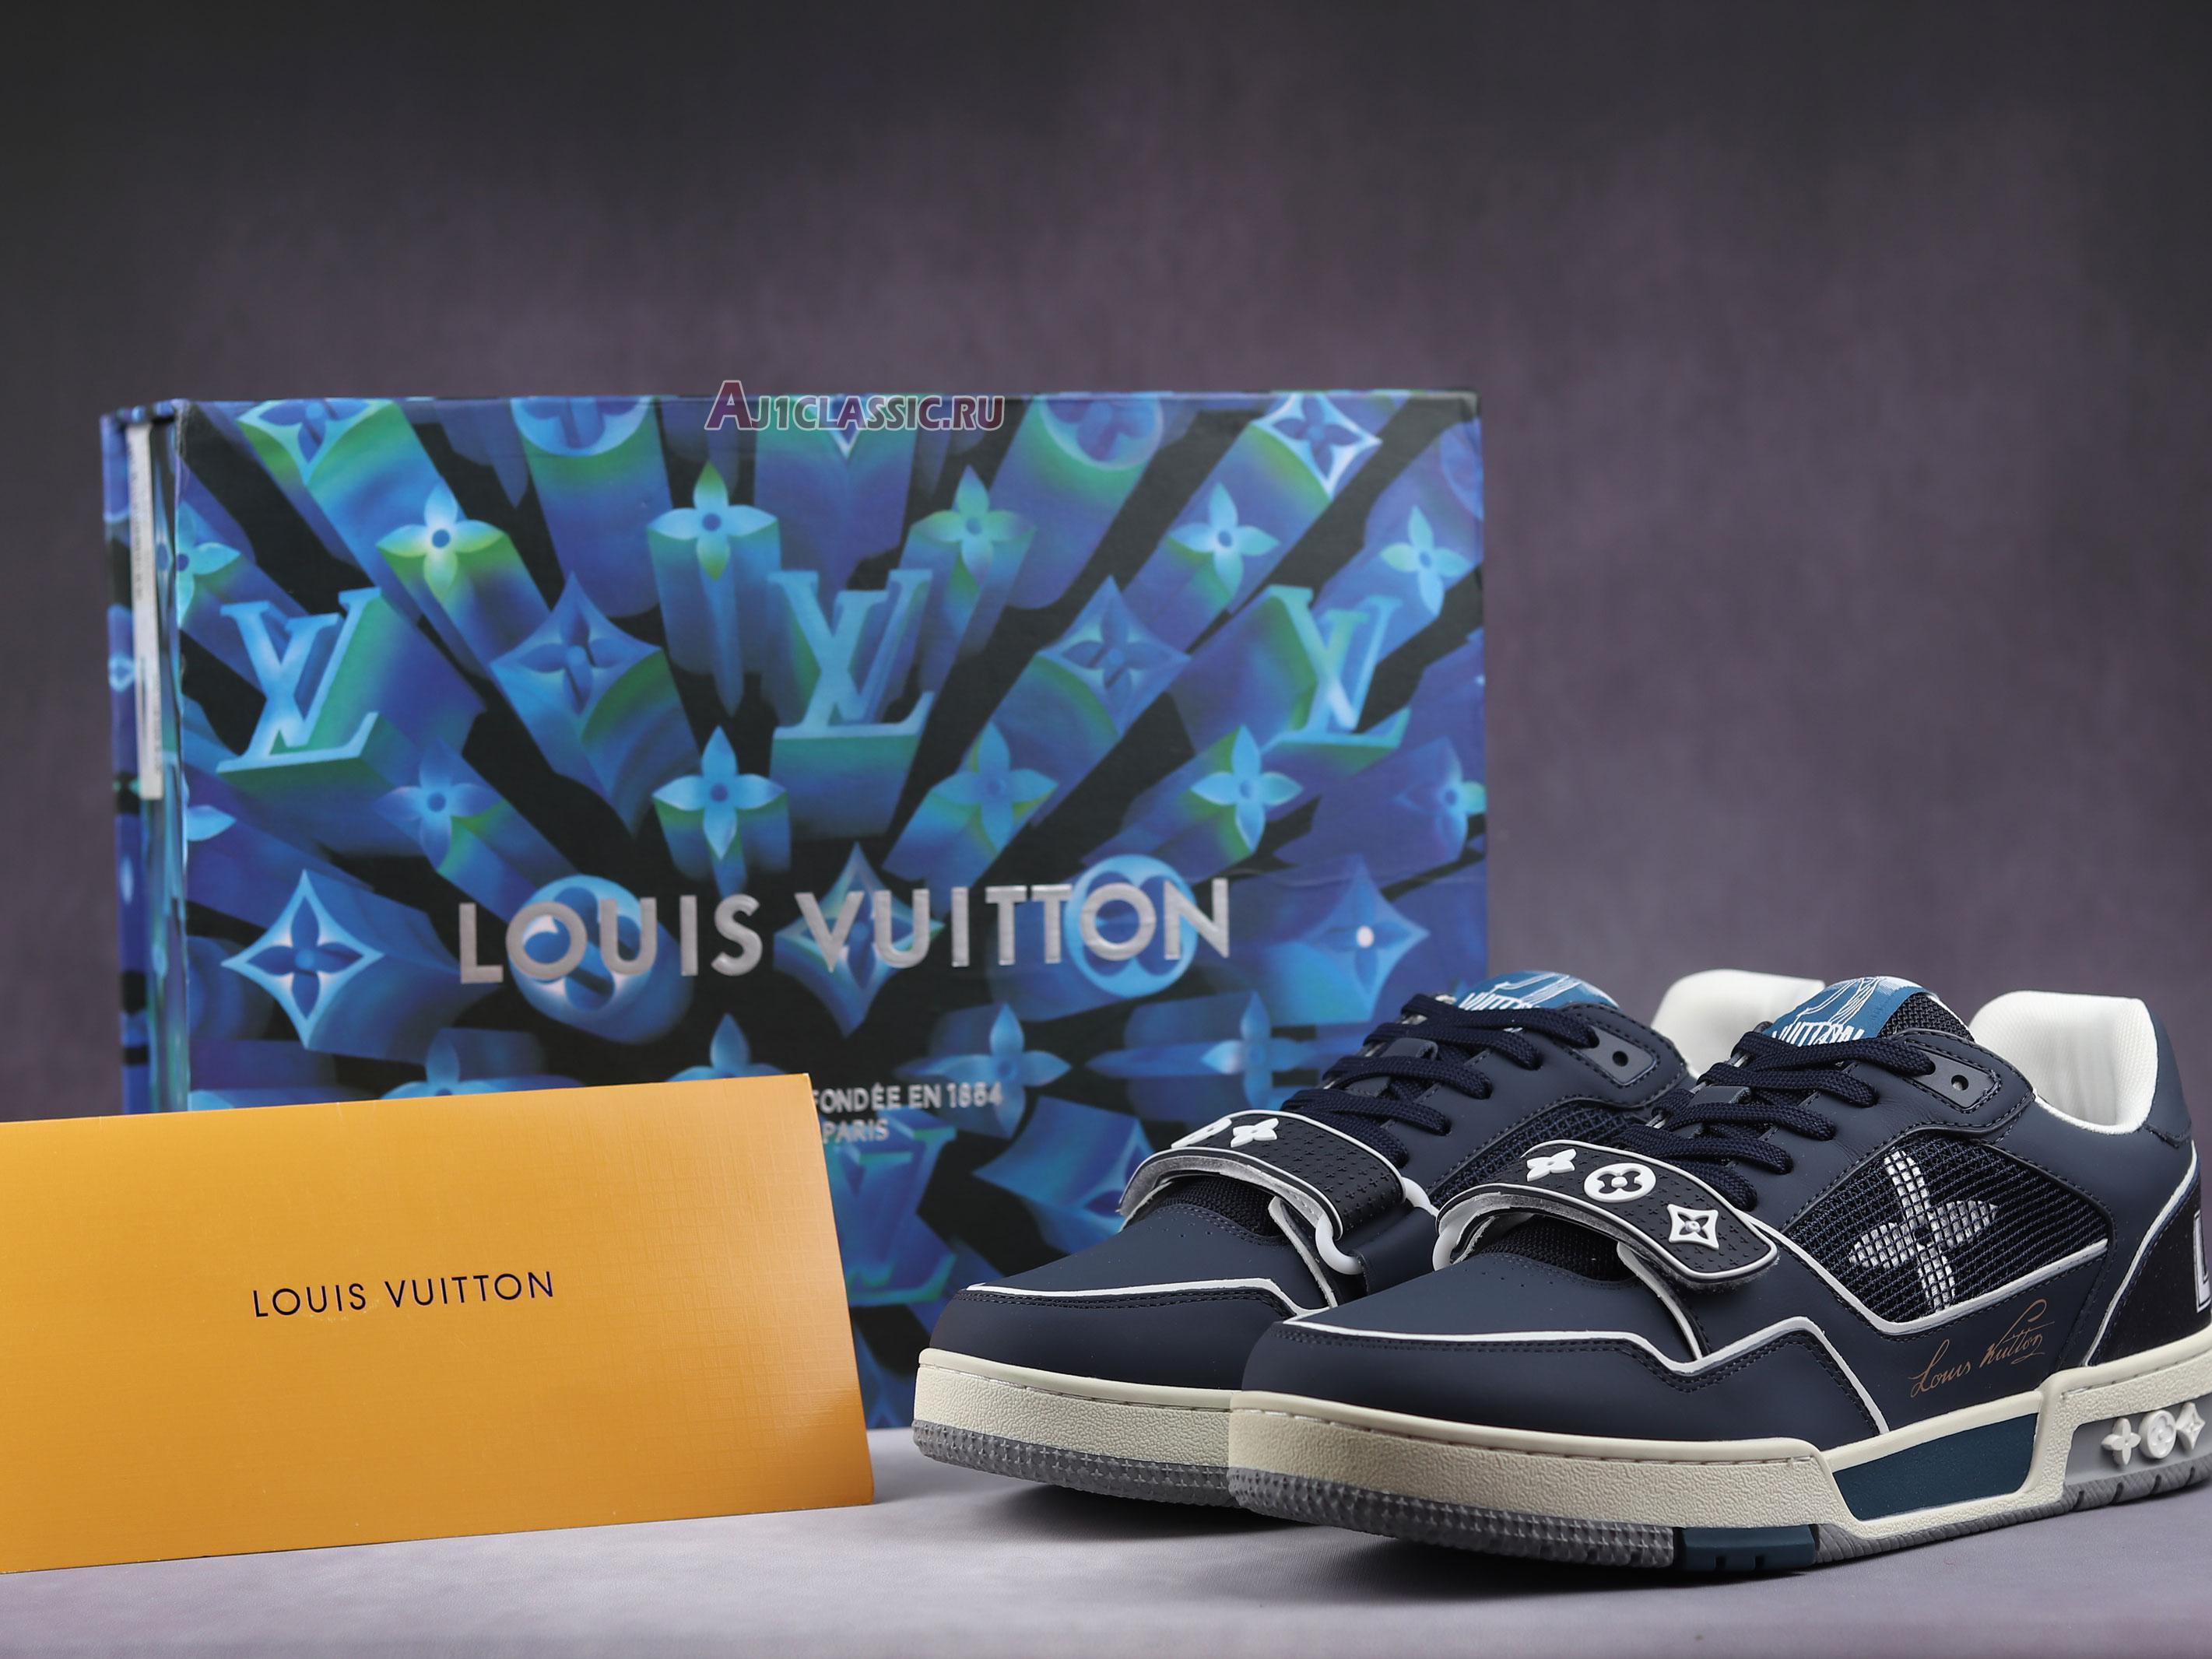 Louis Vuitton Trainer Low Navy White 1A9DEG Navy/Blue/White Sneakers